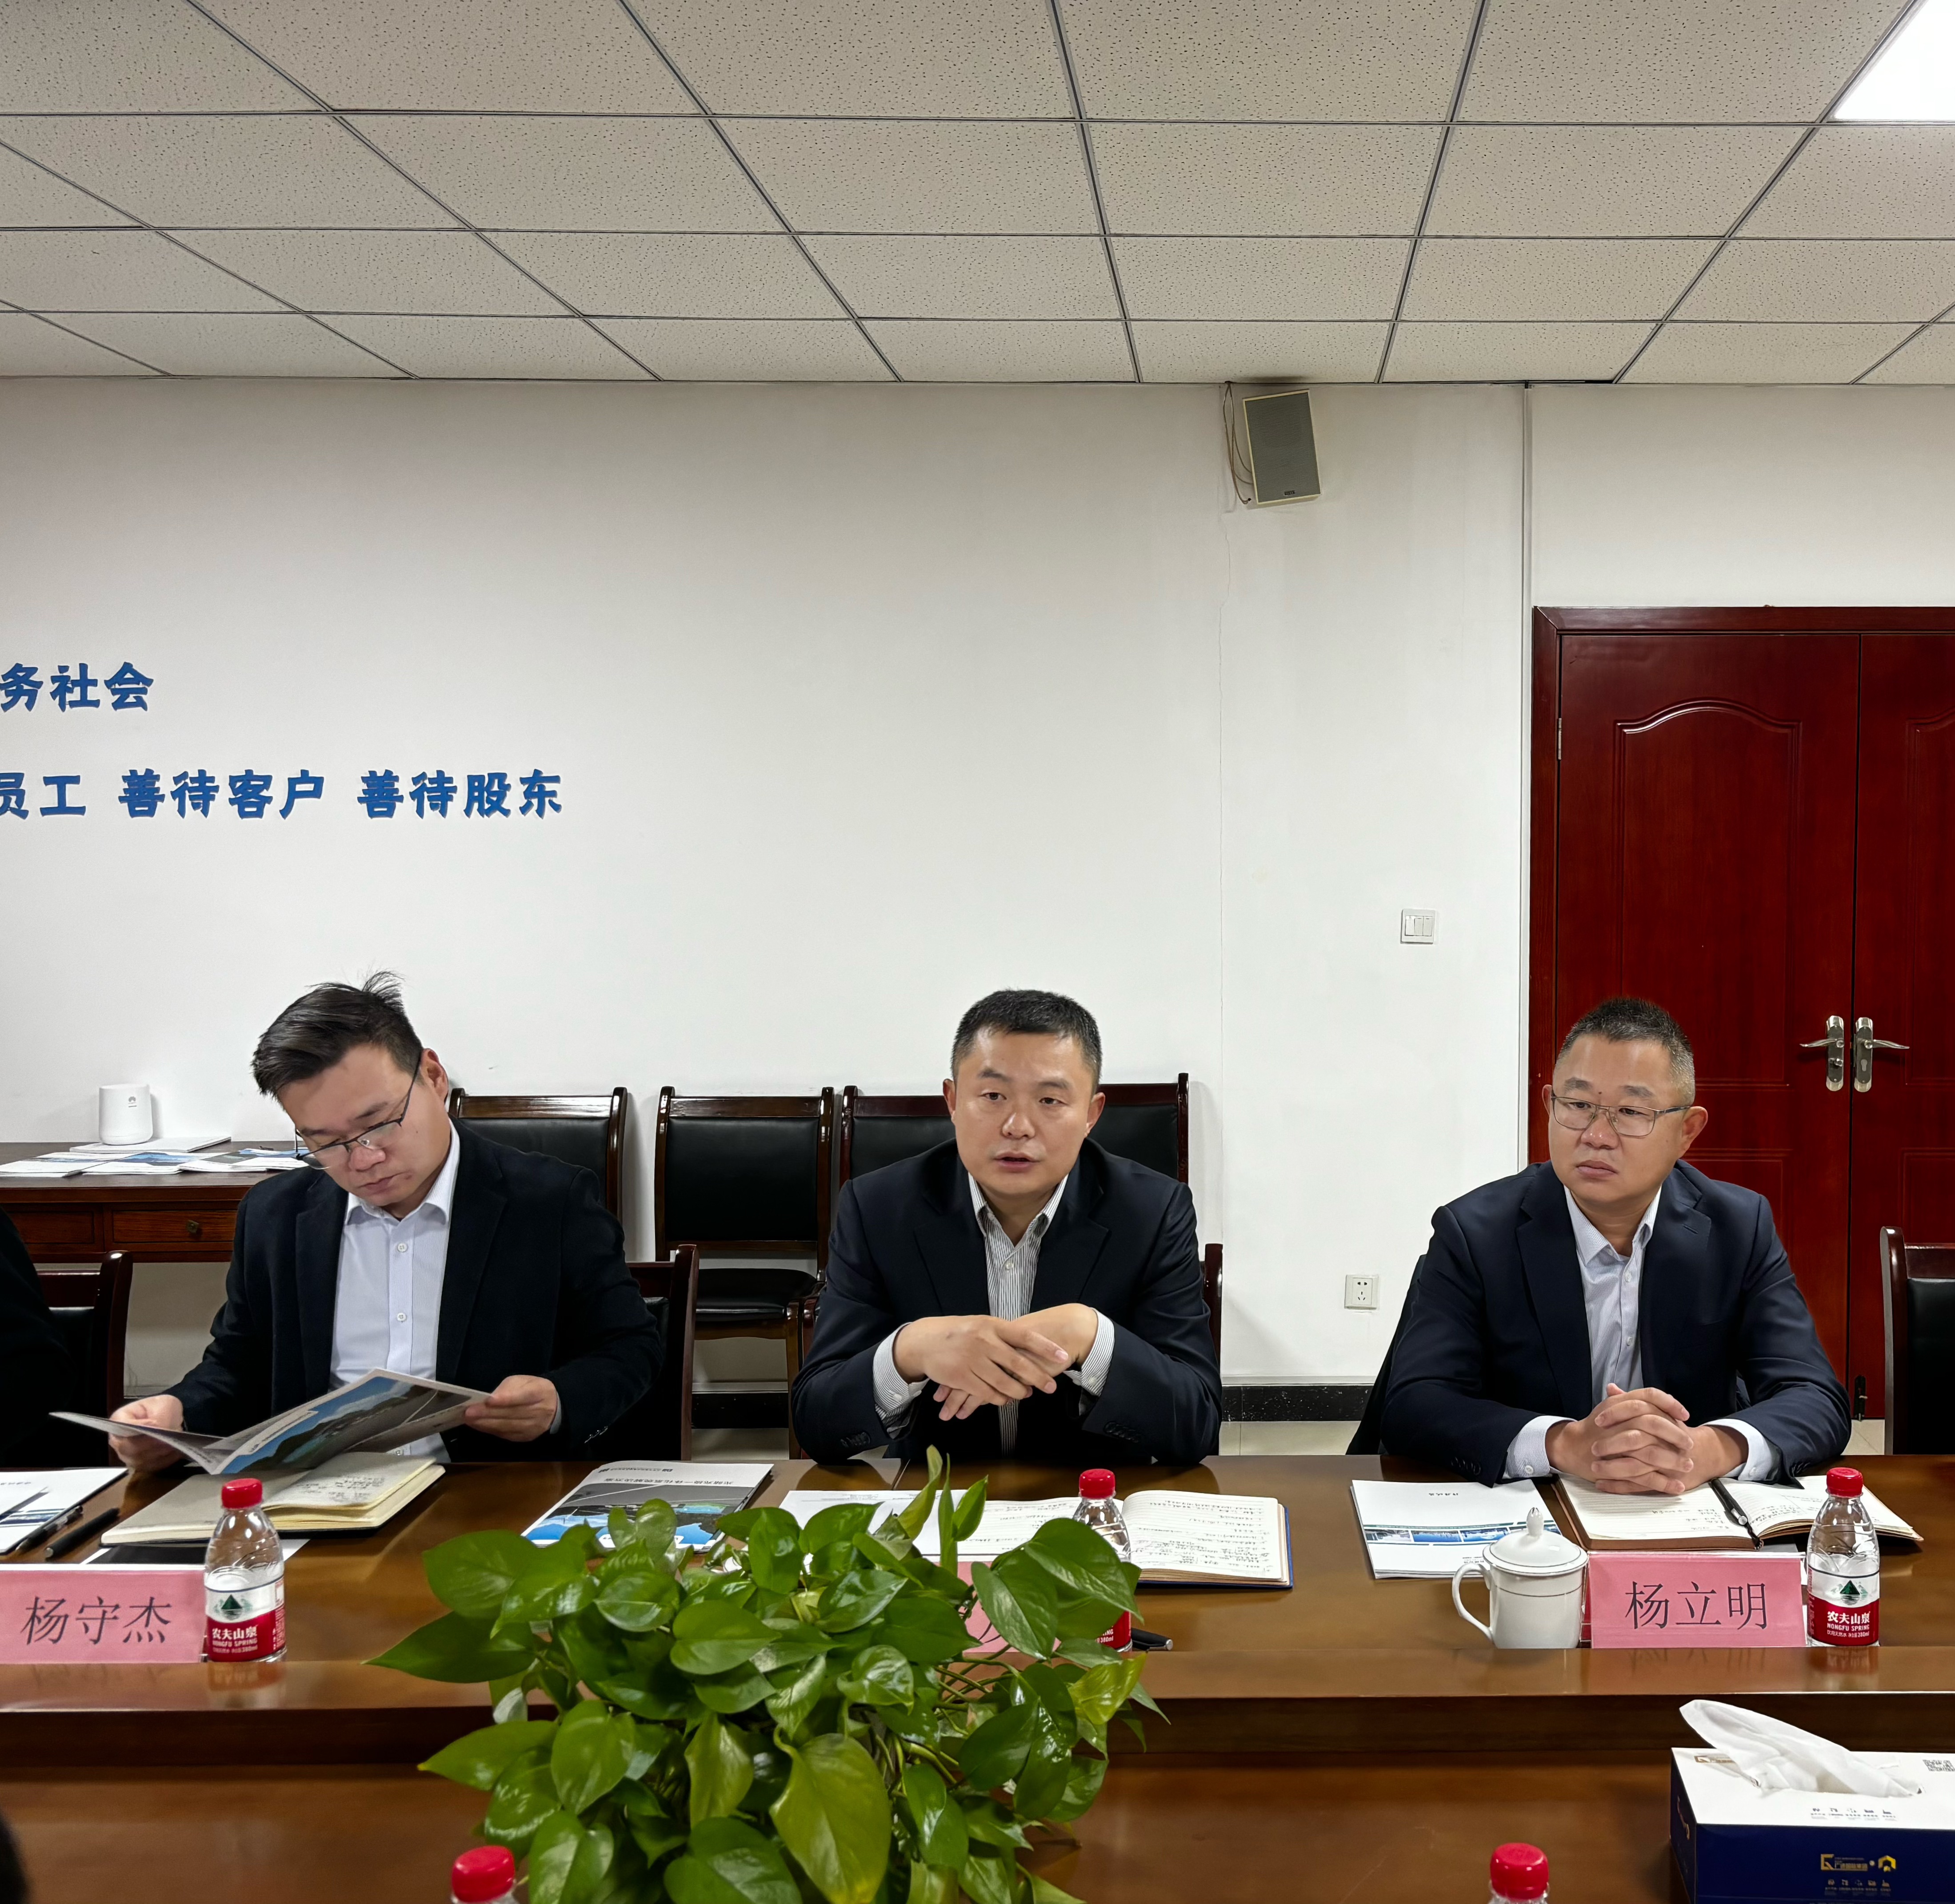 Xuchang Intelligent Relay Co., Ltd. visited Guangjin International Group